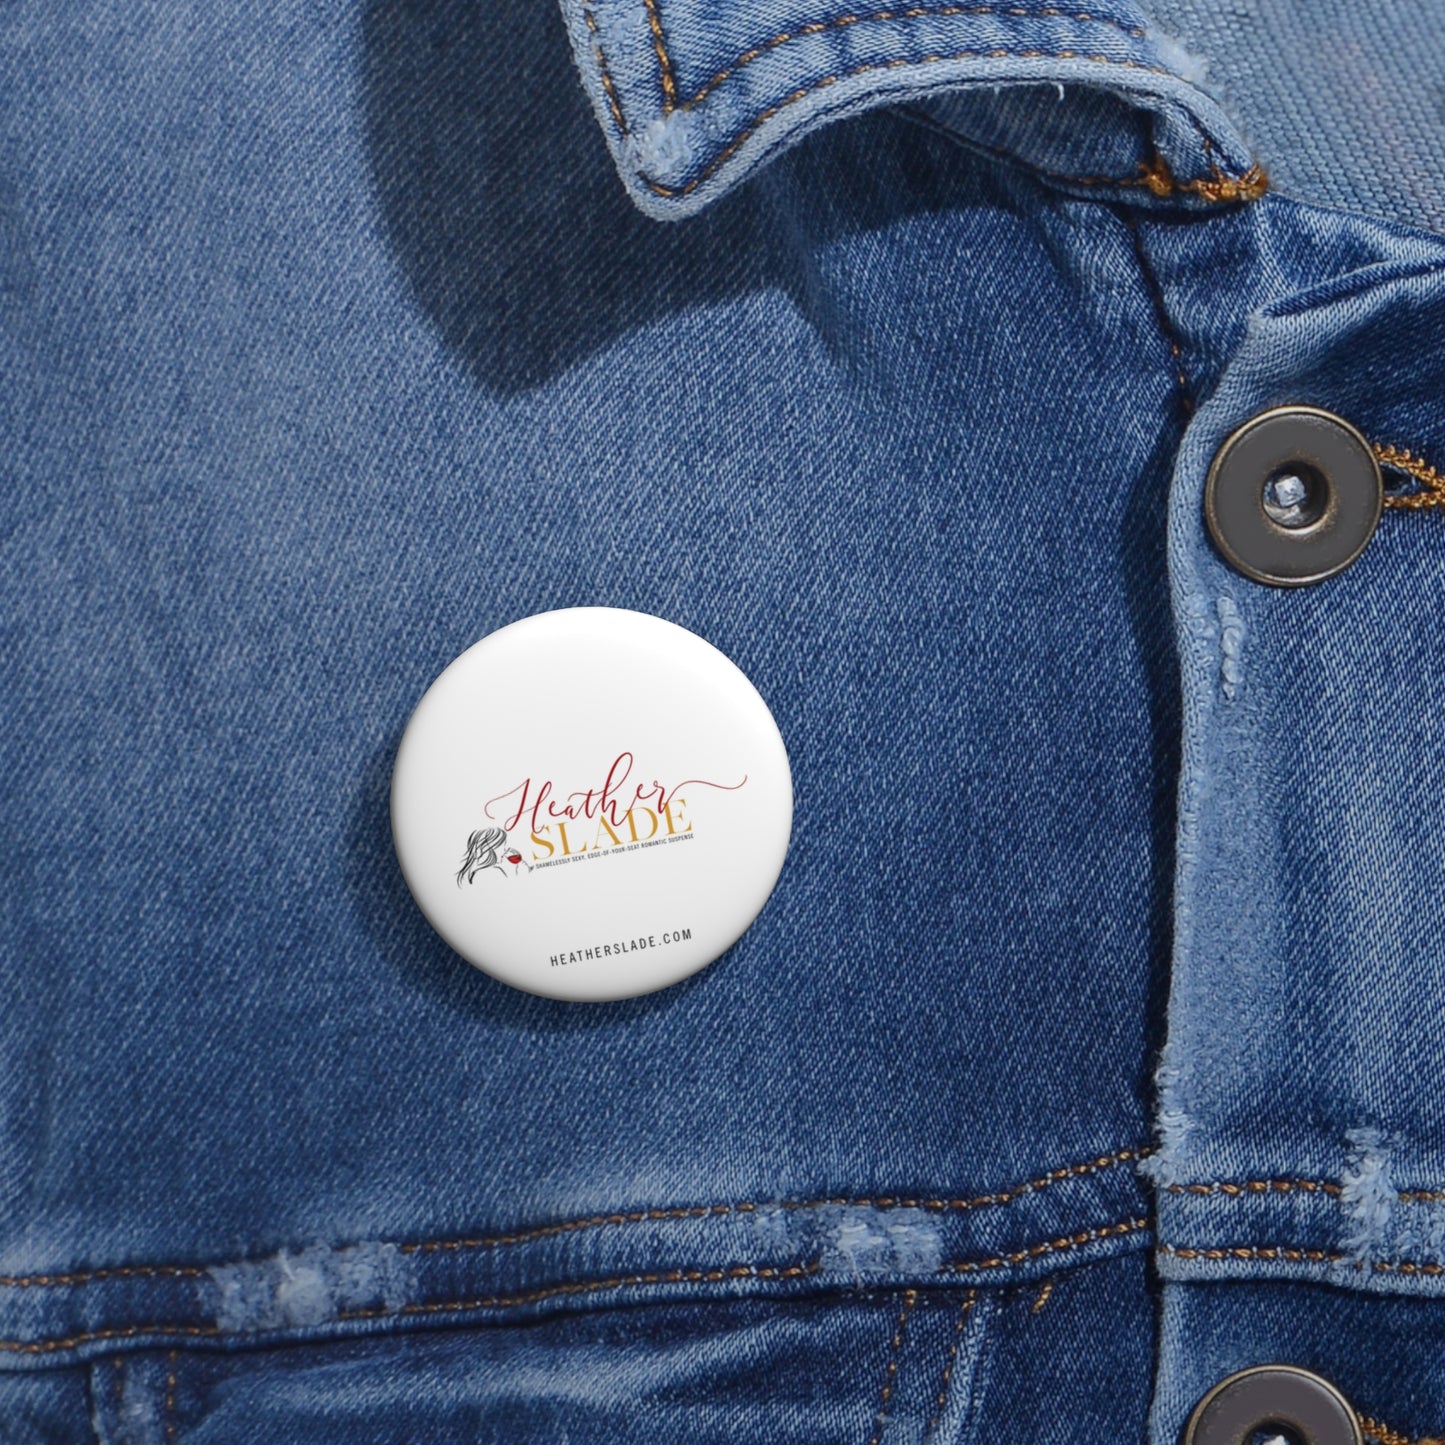 Heather Slade Logo Pin Buttons